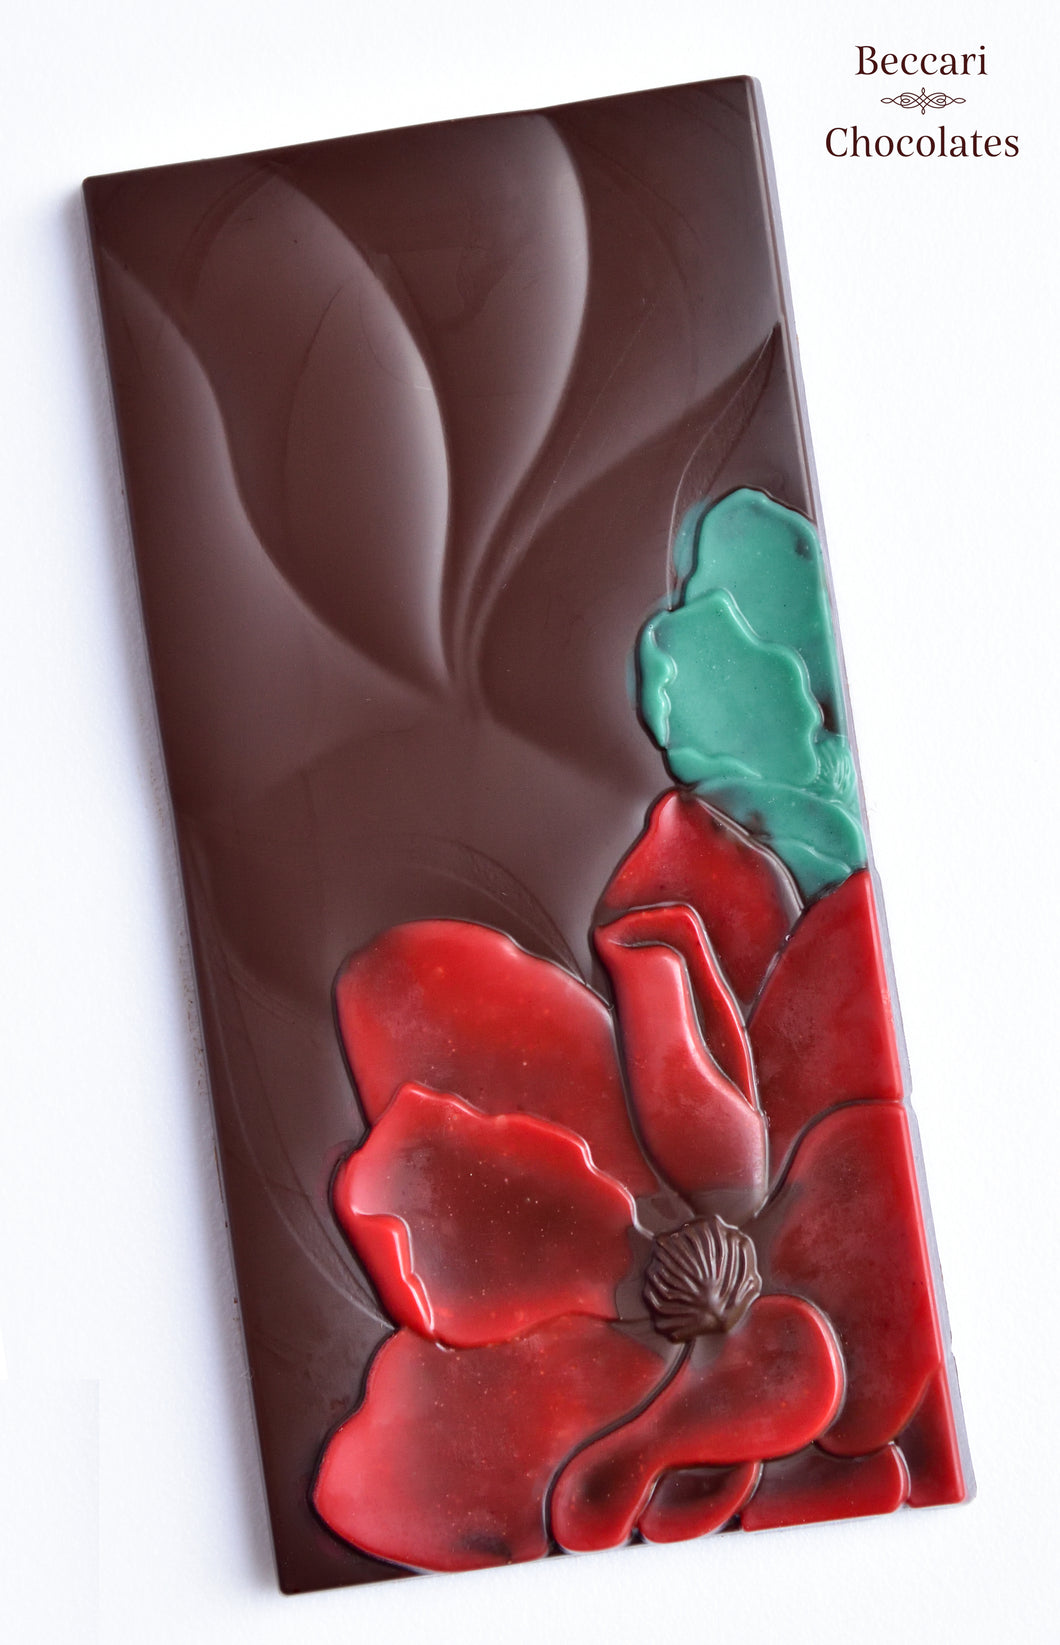 Blossom Bar, made with Peruvian dark chocolate